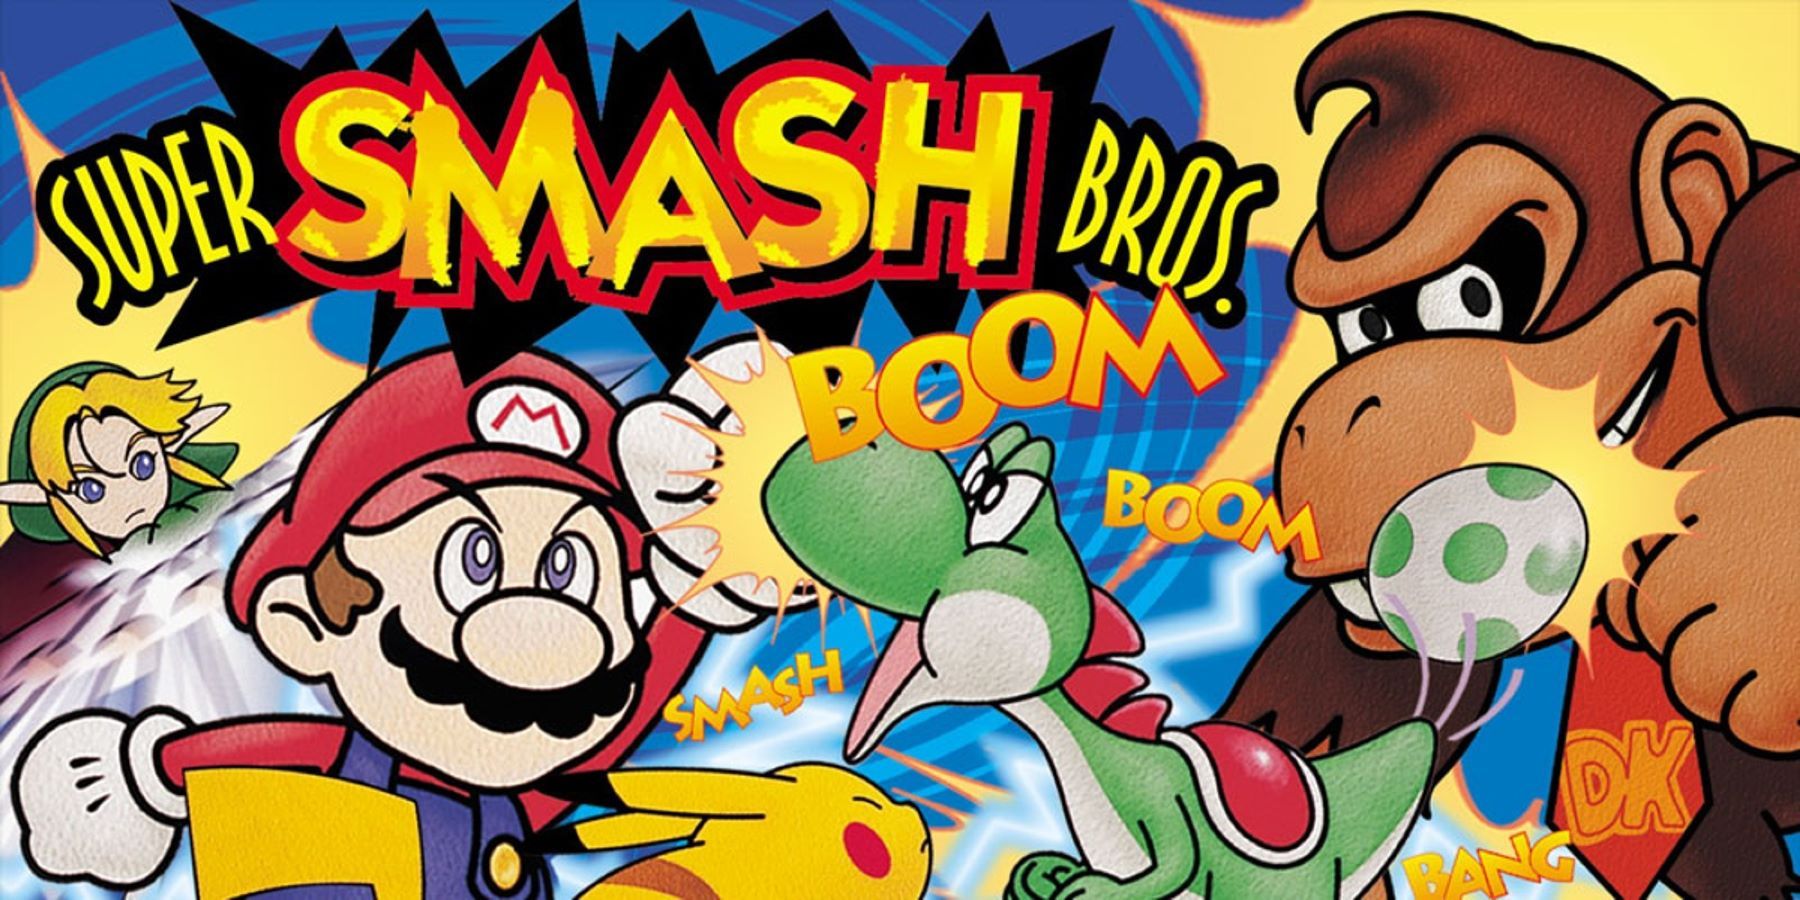 European box art for Super Smash Bros. from the Nintendo 64, featuring Mario, Yoshi, Pikachu, Link, and Donkey Kong